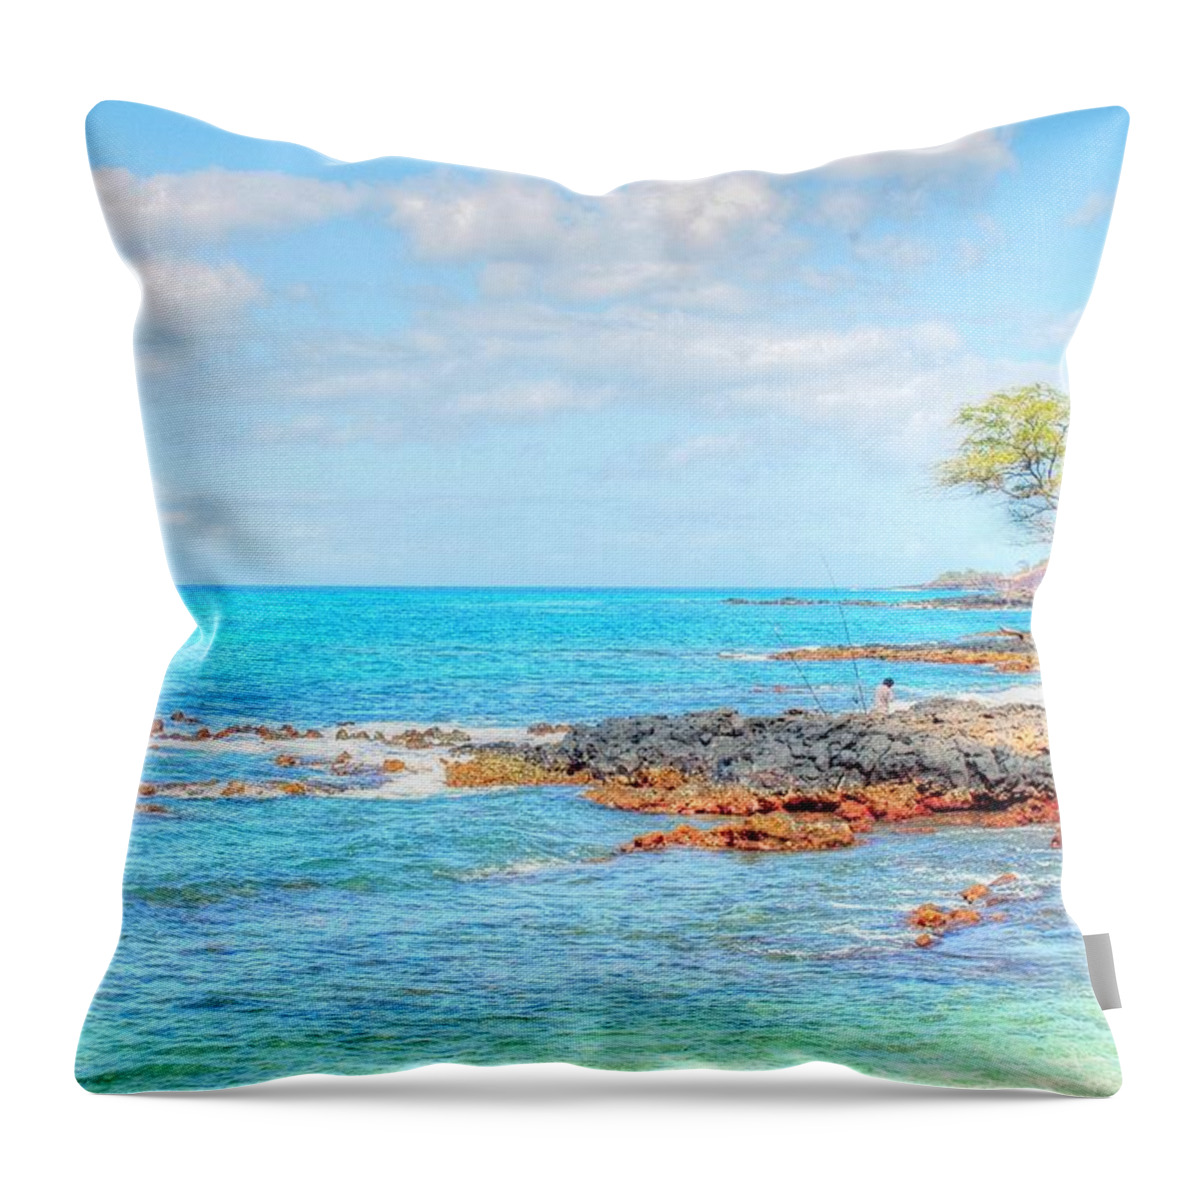 Maui Throw Pillow featuring the photograph Kihei Paradise by Richard Omura